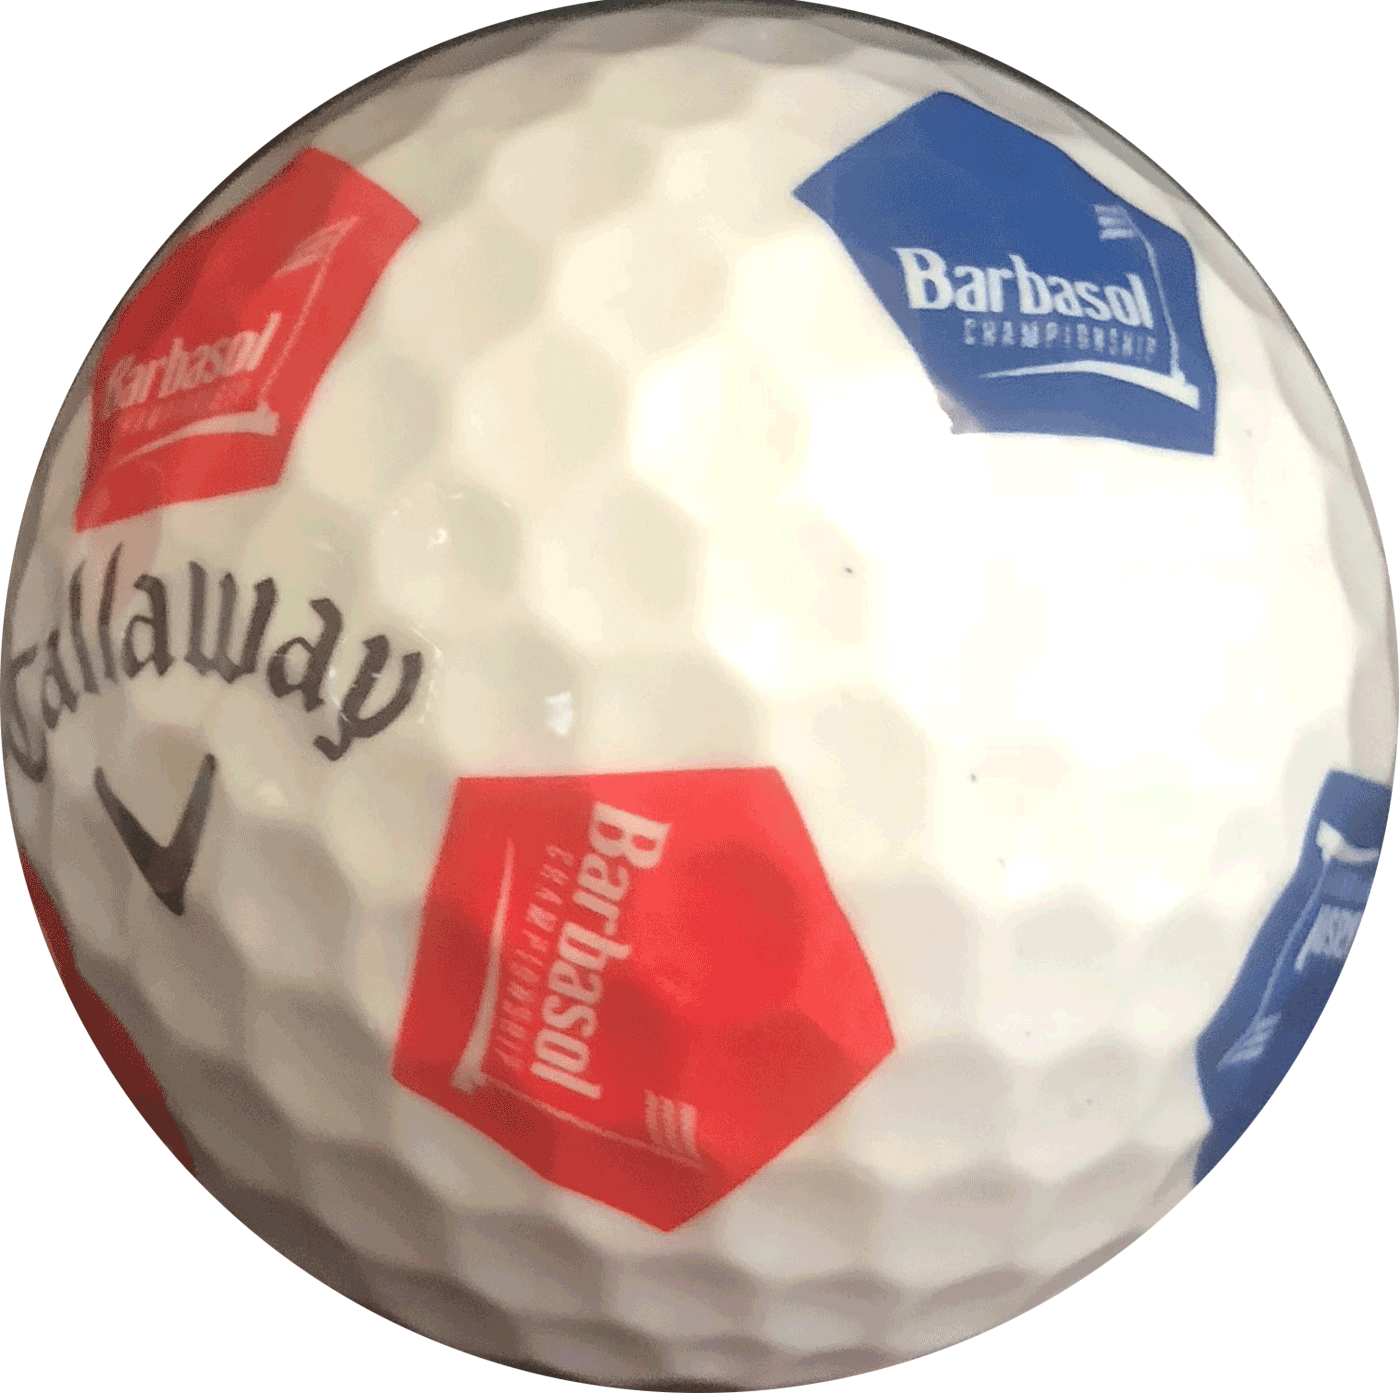 Barbasol Championship ‹ Truvis Golf Balls